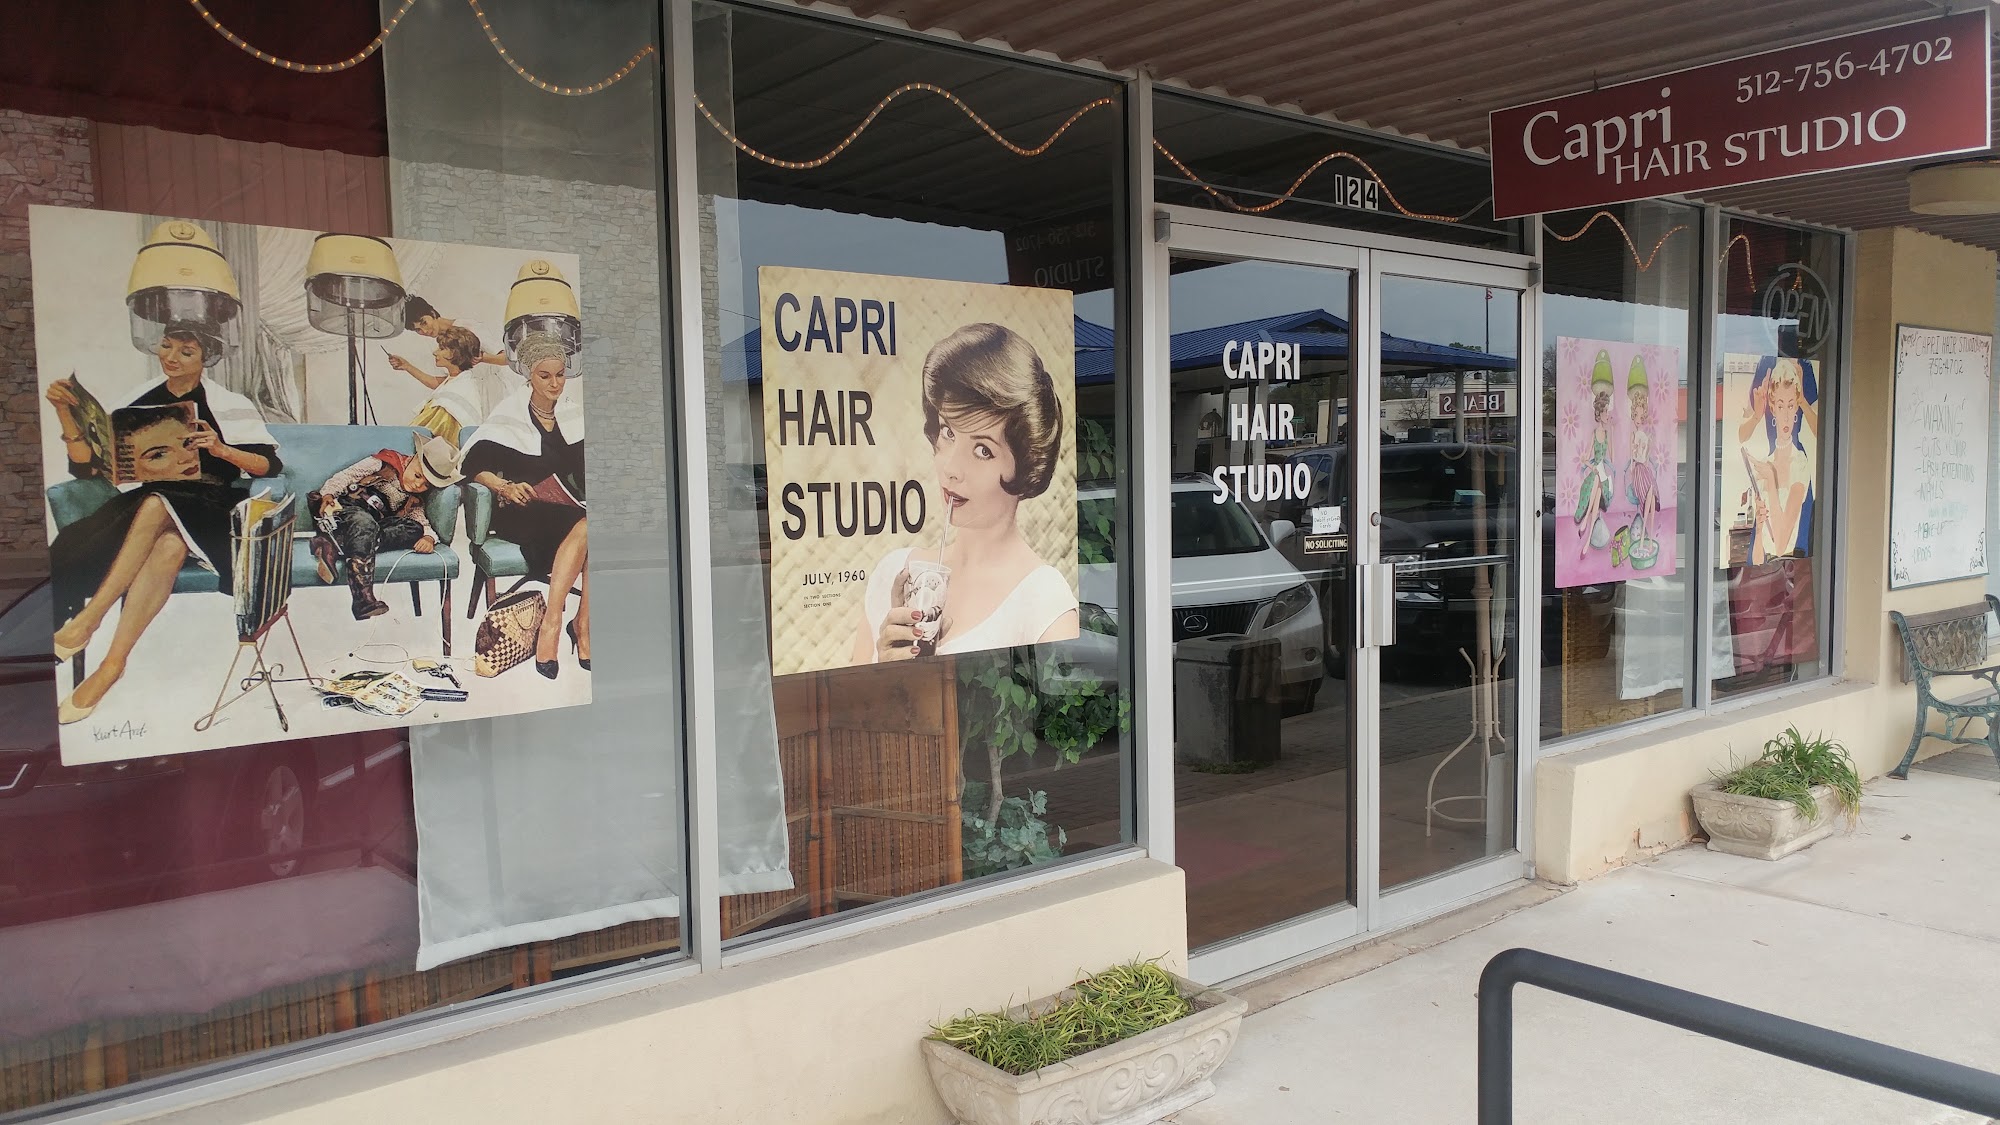 Capri Hair Studio 124 S Main St, Burnet Texas 78611